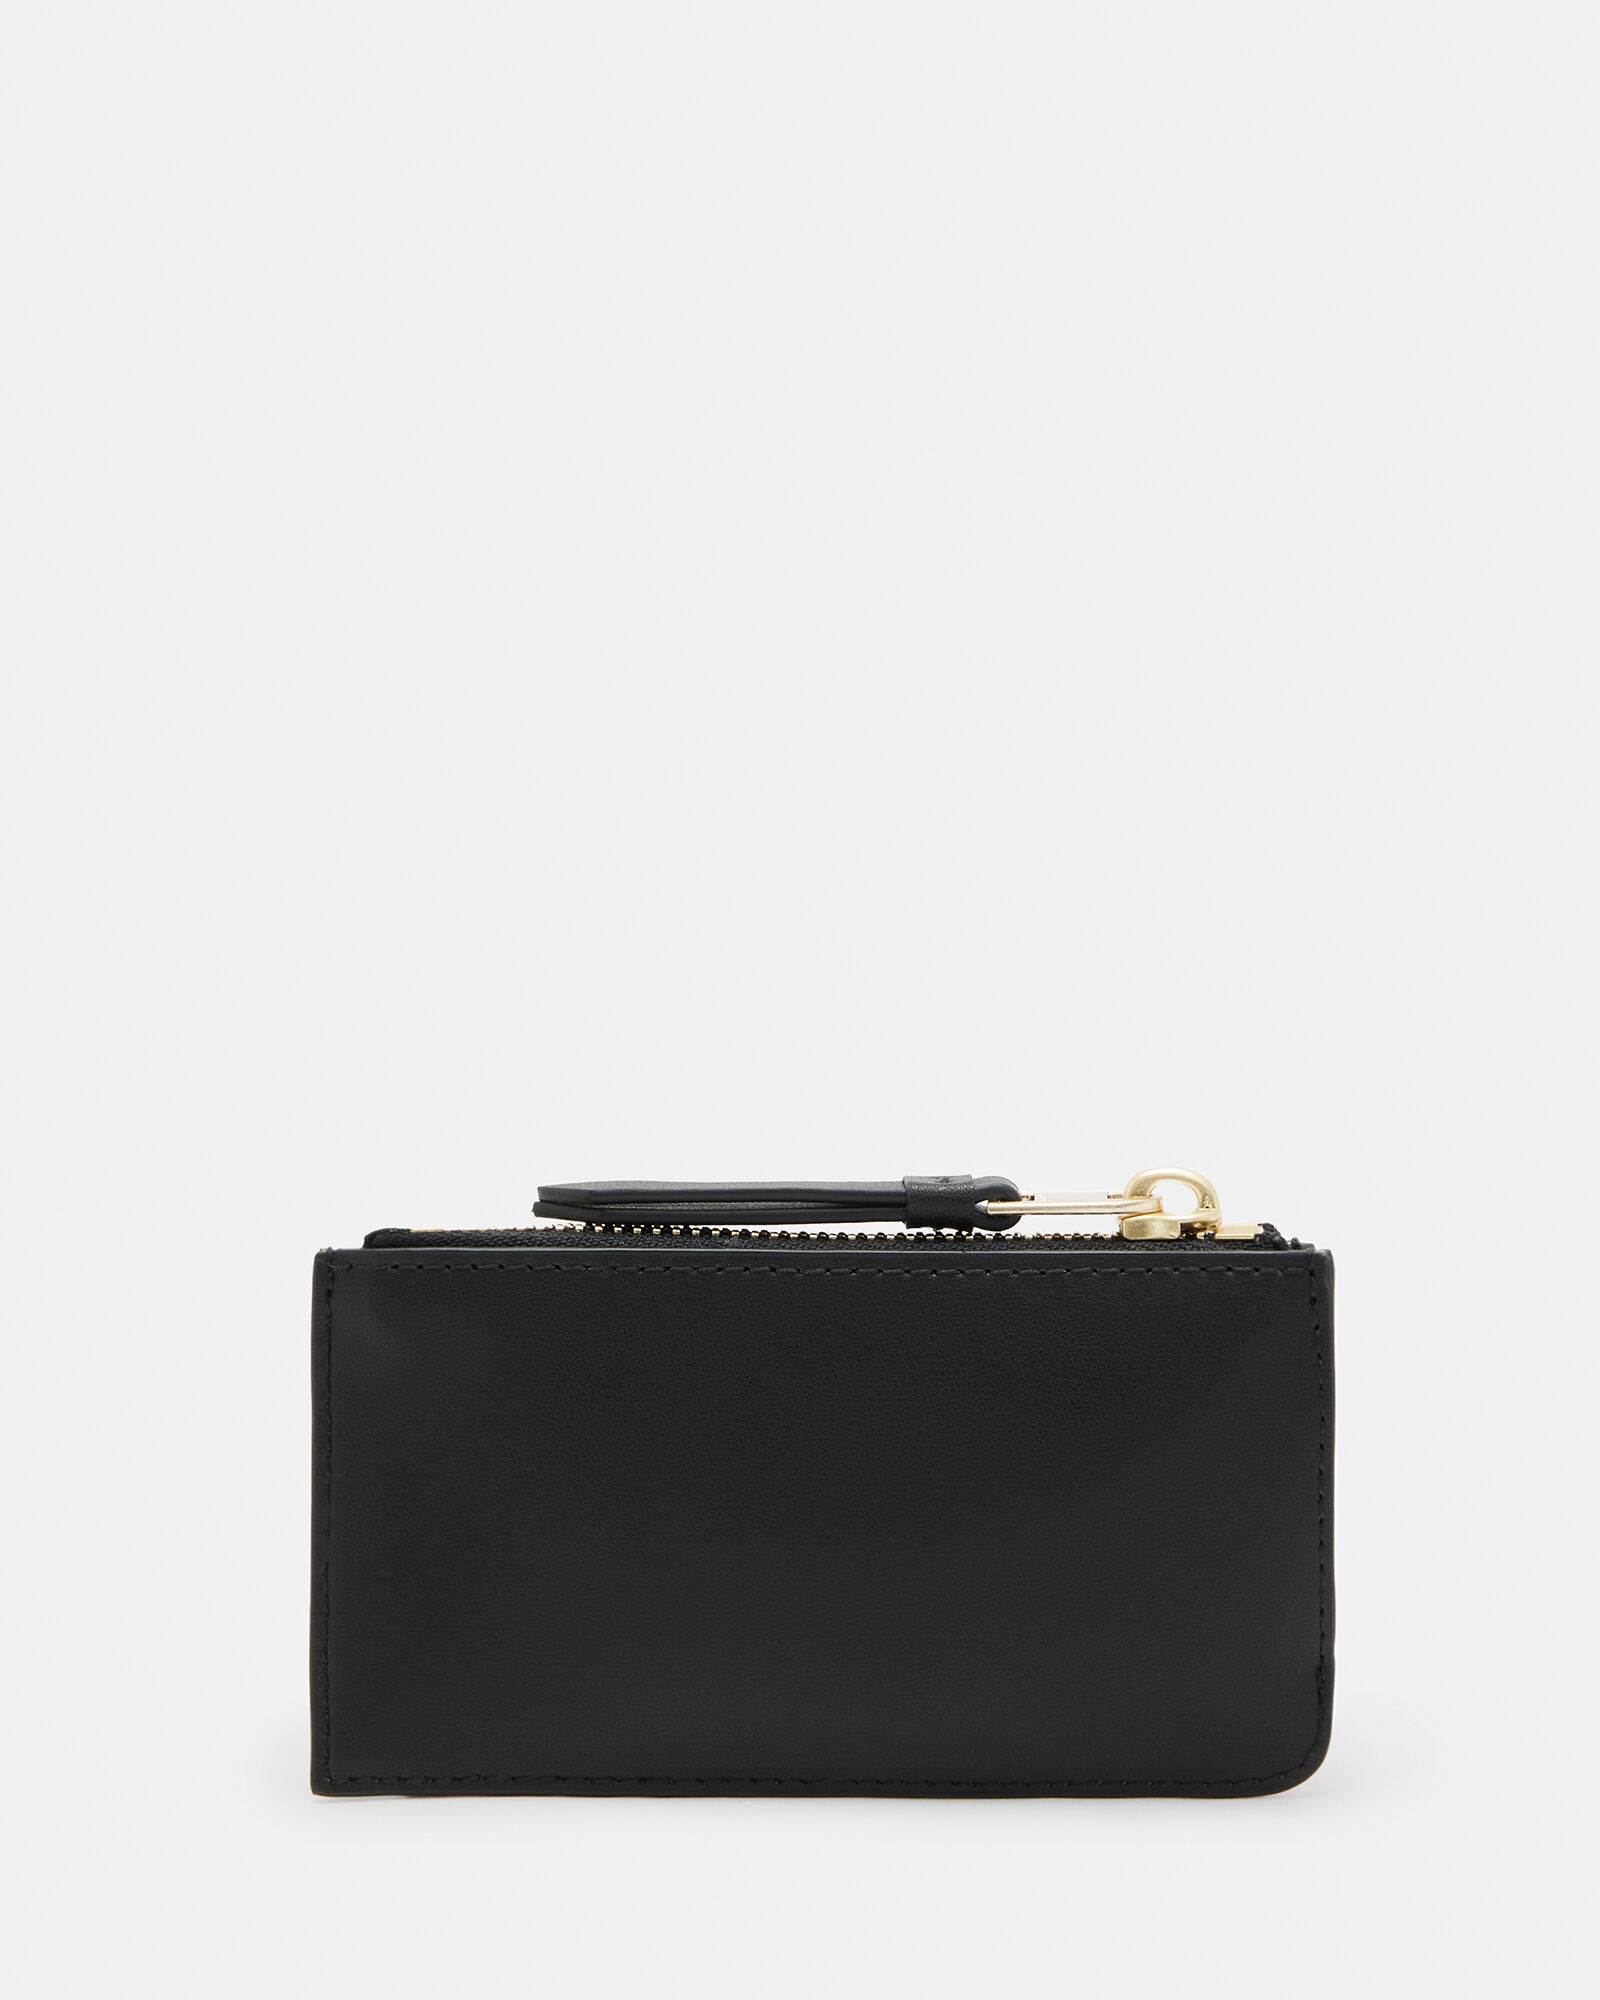 Marlborough Leather Wallet Black | ALLSAINTS US